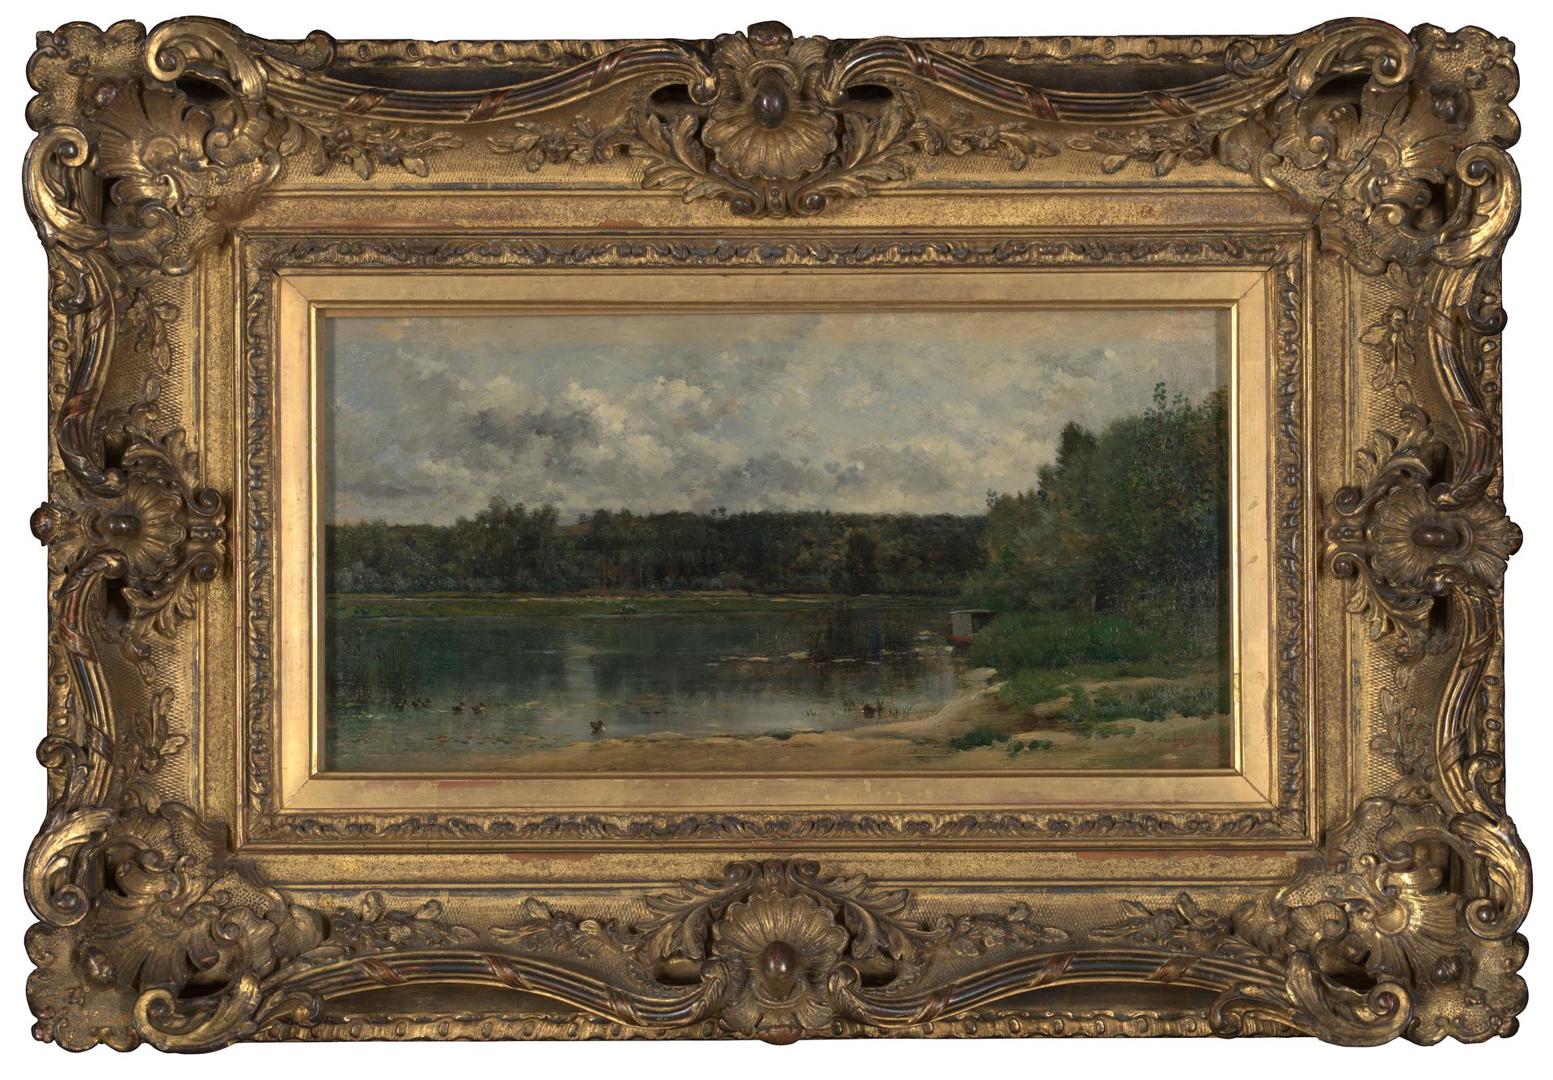 River Scene with Ducks by Charles-François Daubigny